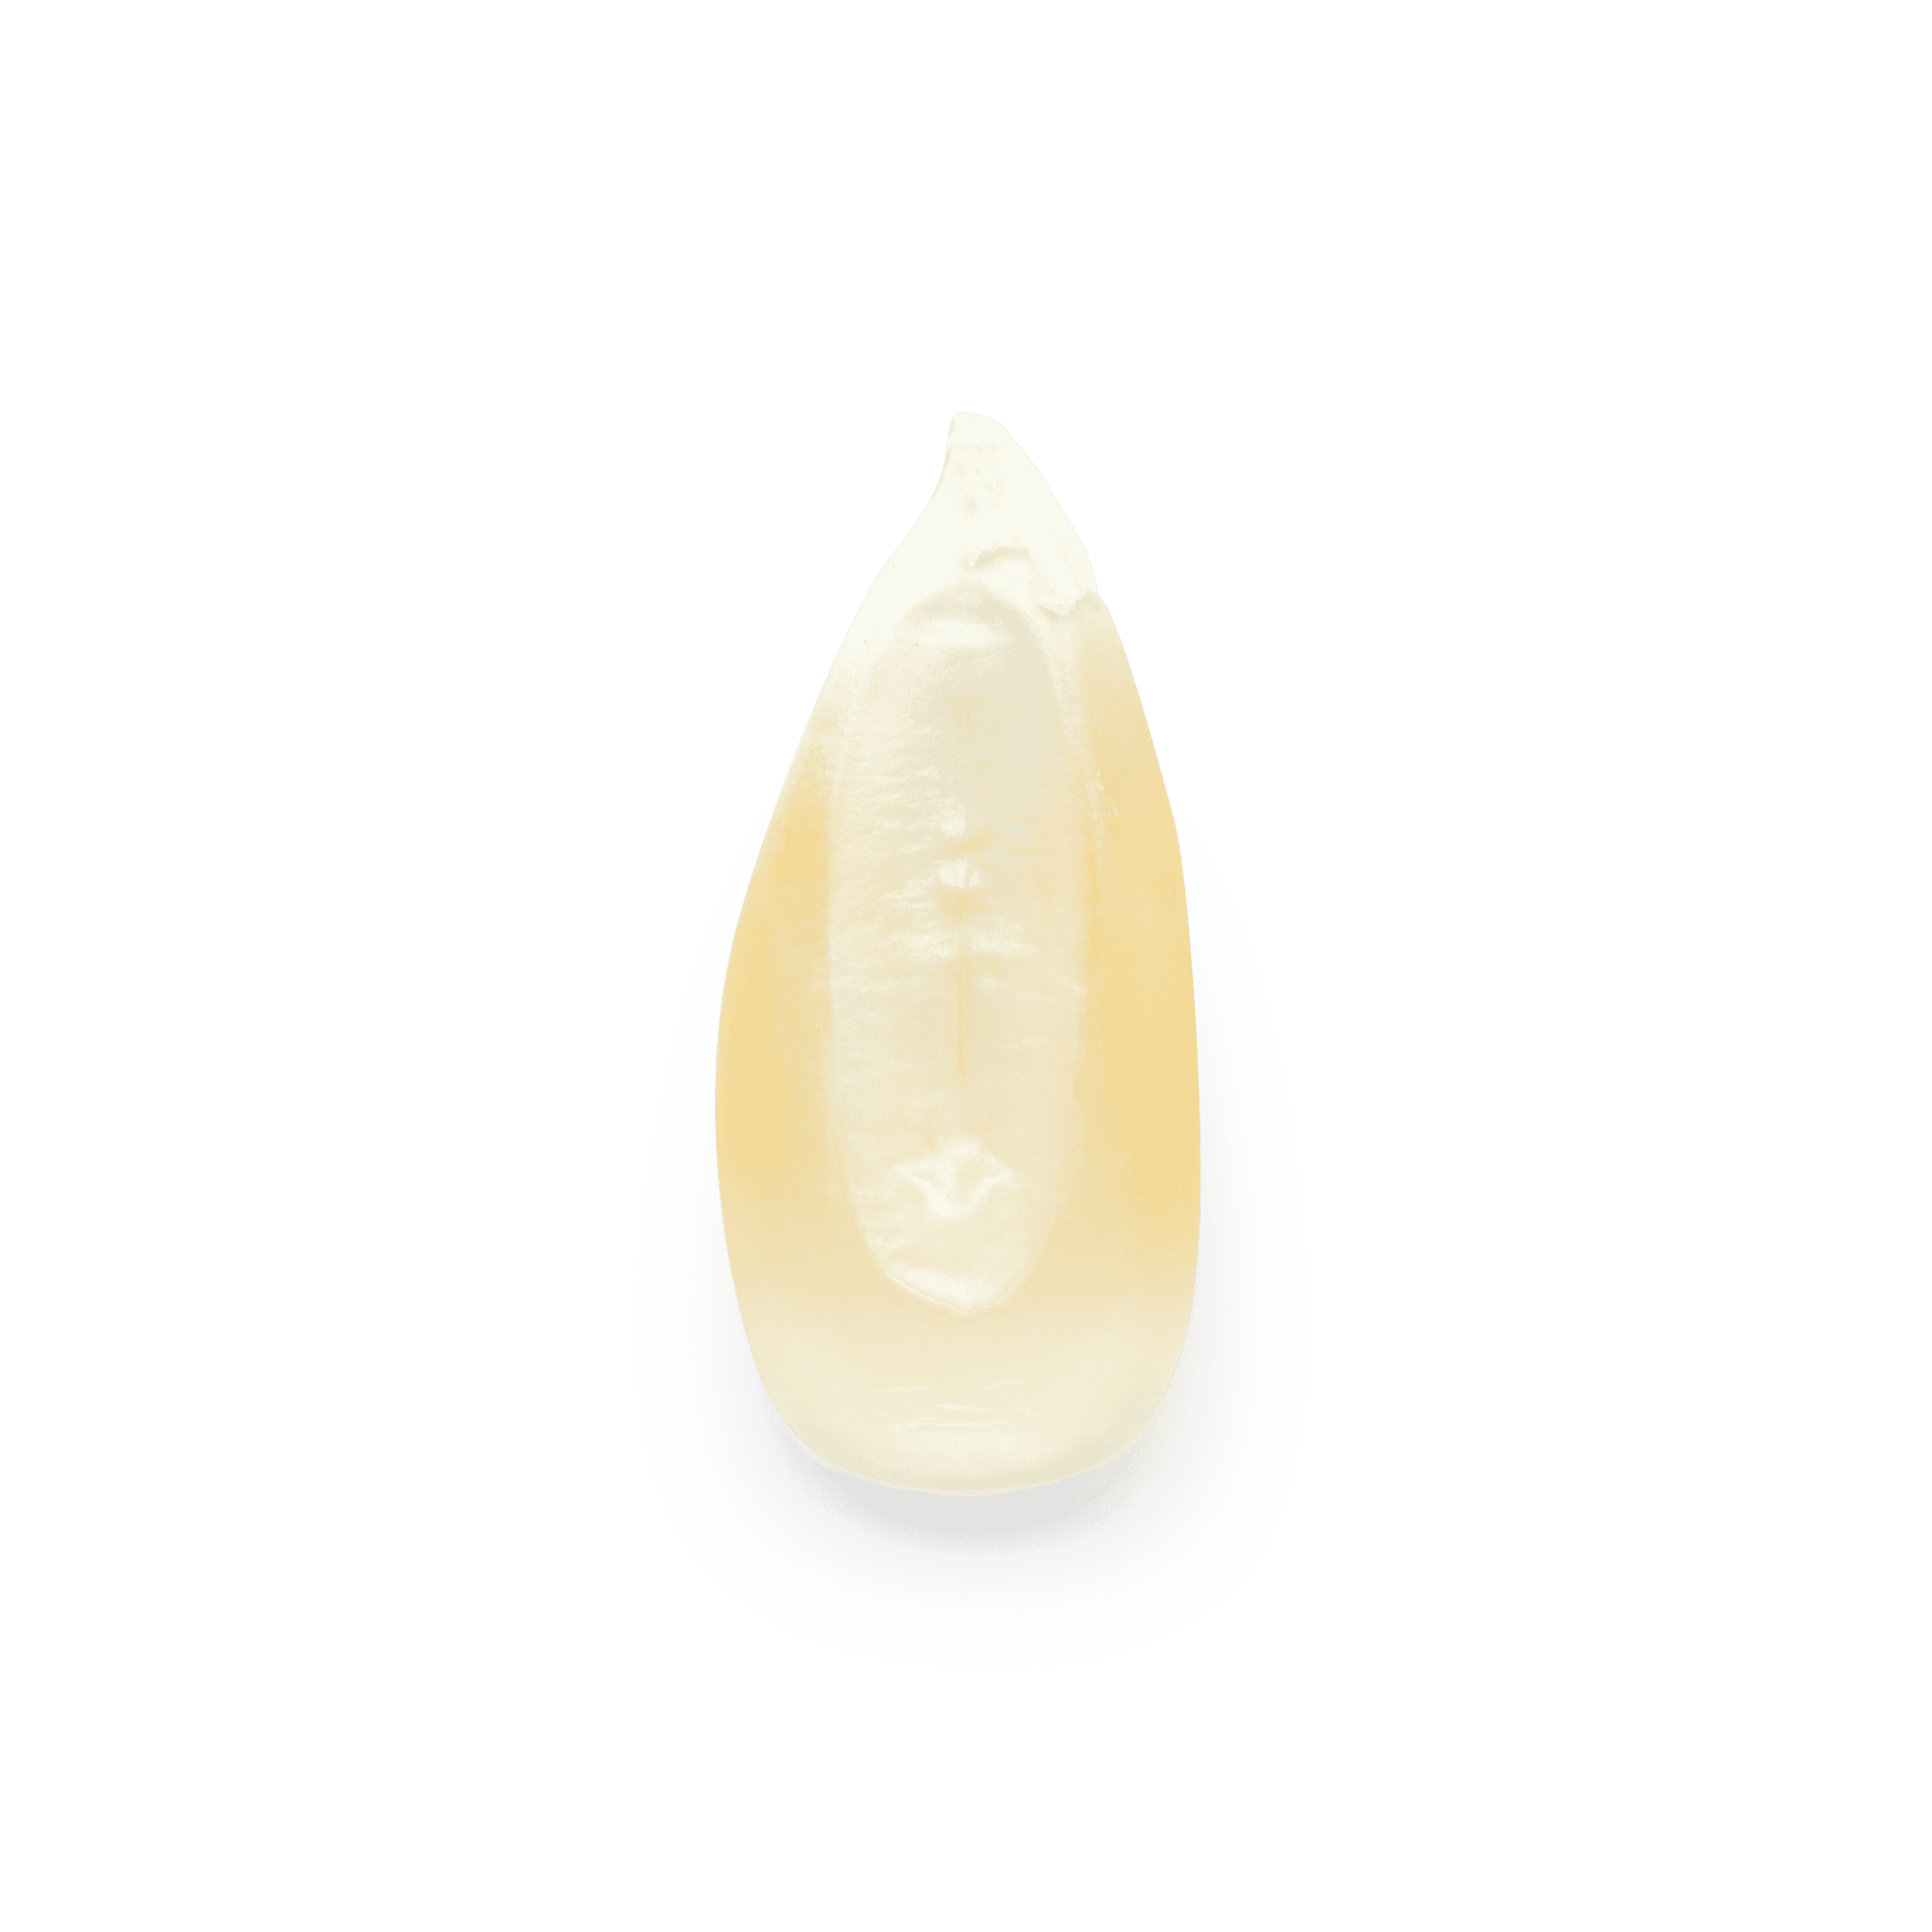 Heirloom Corn | Masienda White Cónico from Mexico | 55 lb | #1 of #3